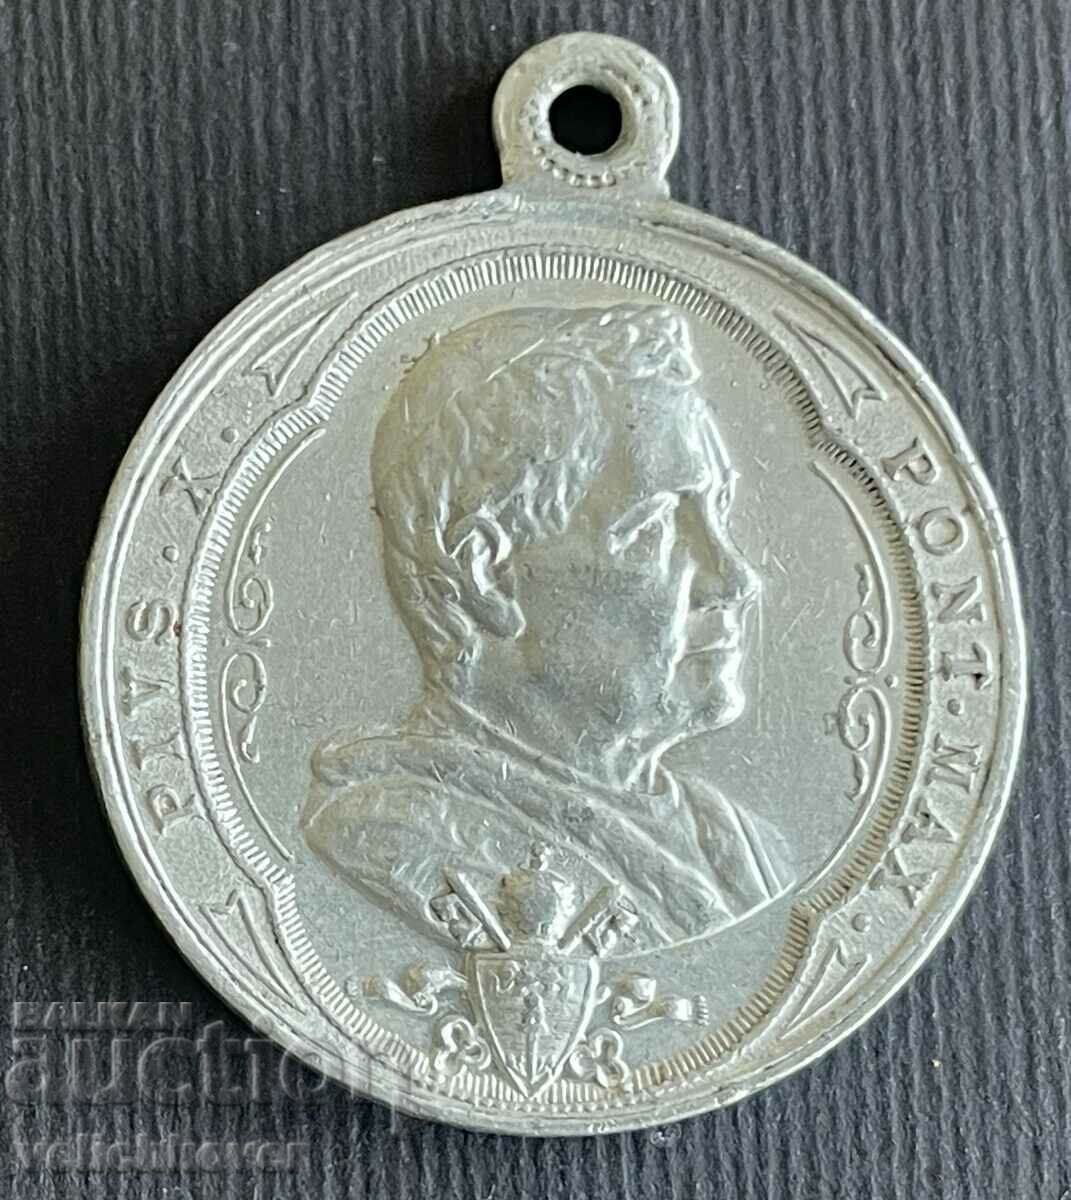 35741 Vatican Italia Jeton medalie catolic Papa Pius al X-lea